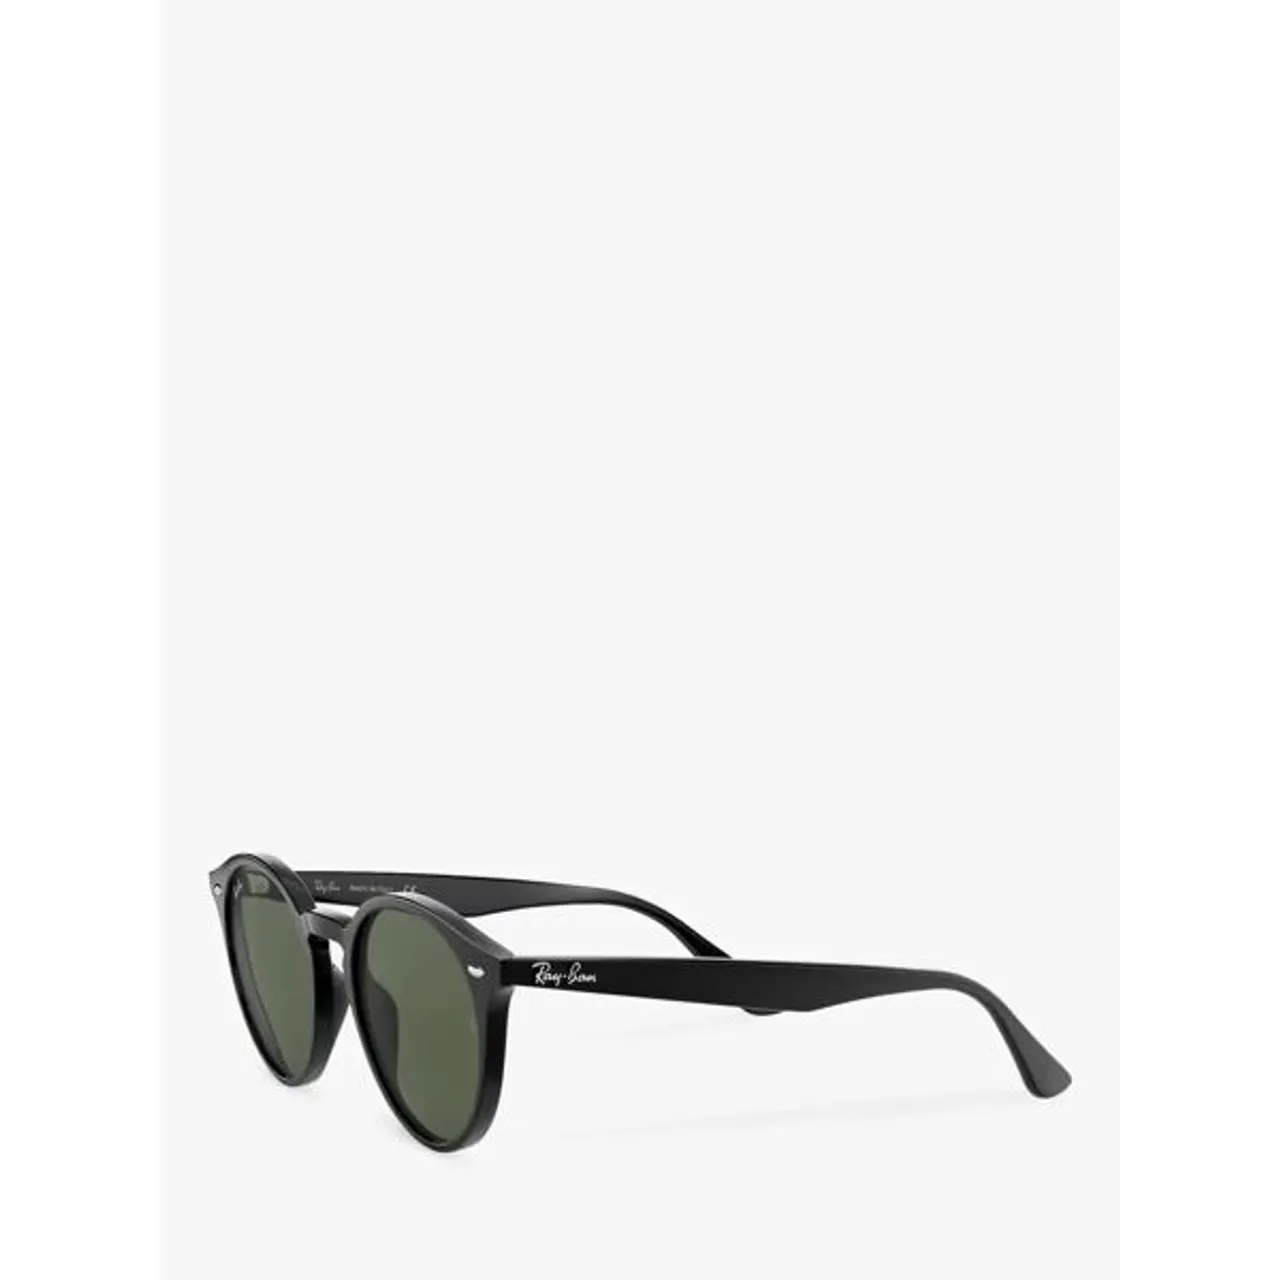 Ray-Ban RB2180 Men's Round Framed Sunglasses, Black/Grey Gradient - Black/Grey Gradient - Male